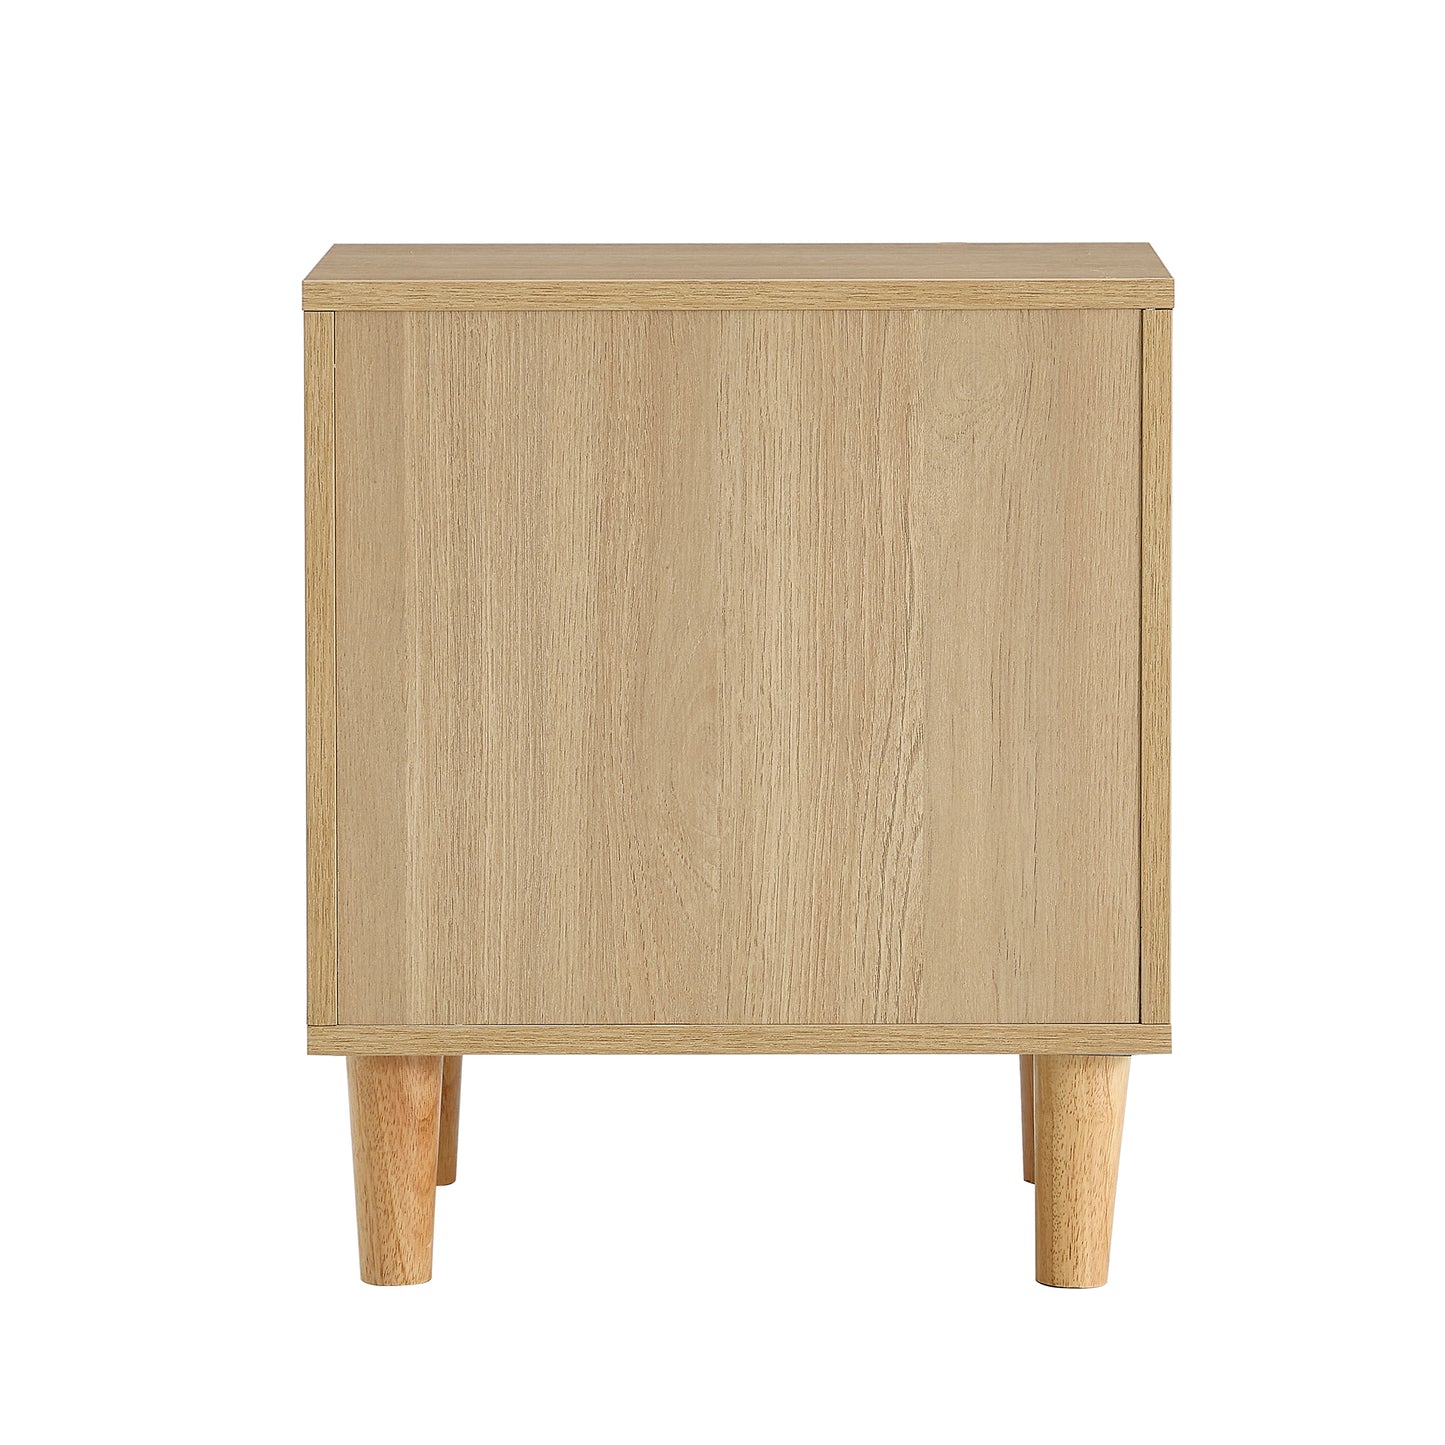 Modern simple storage cabinet bedside cabinet rattan bedside cabinet Small household furniture bedside table